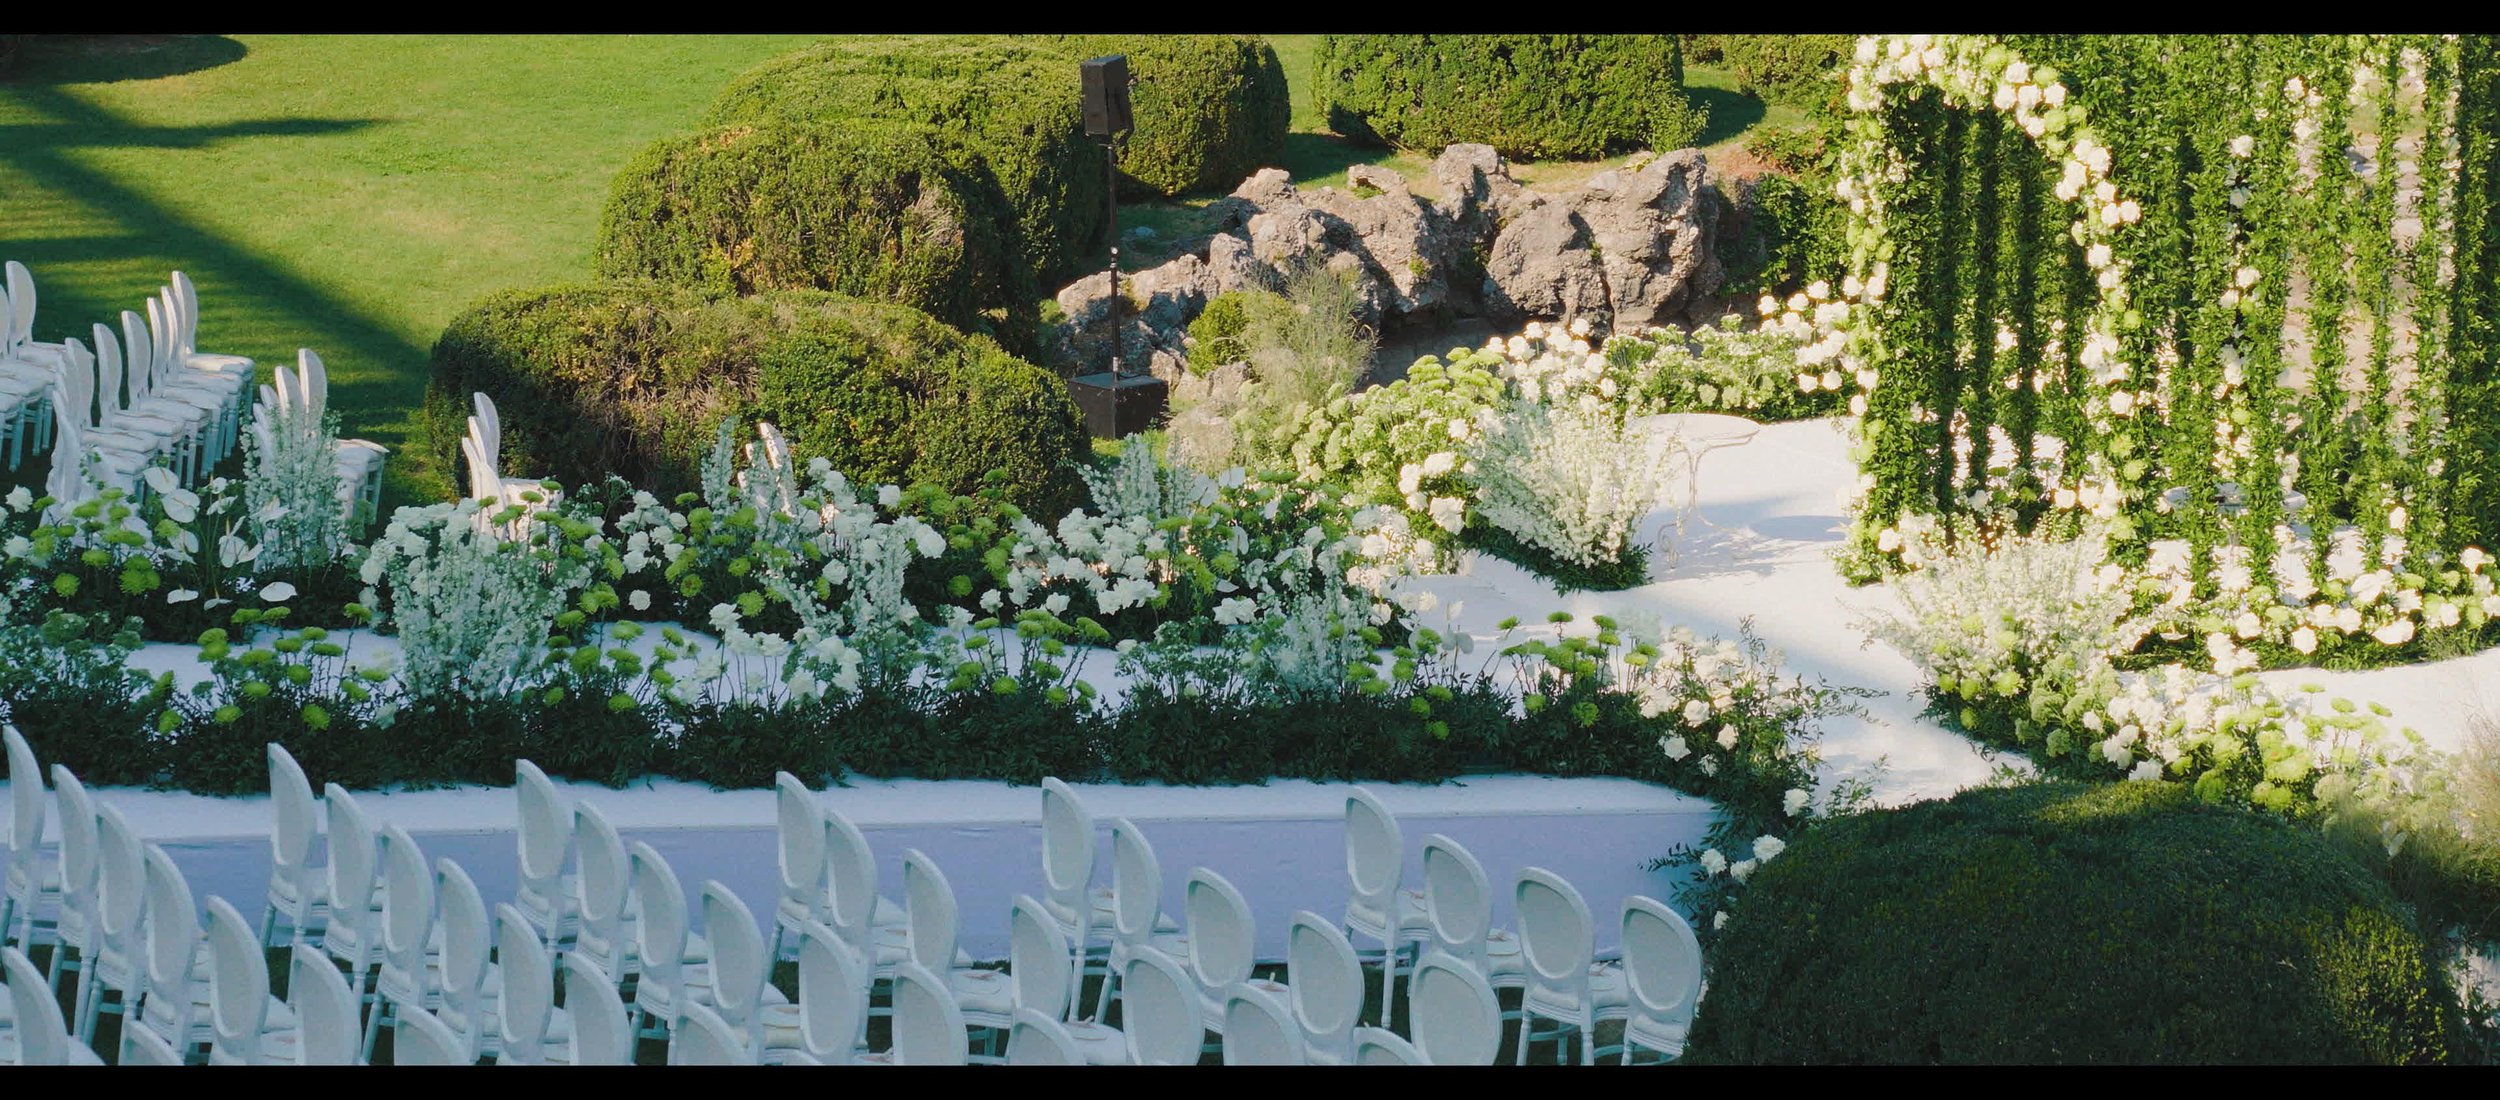 inspire 3 villa erba drone shot luxury wedding ceremomy by alejandra poupel , sacks productions and vincenzo dascanio